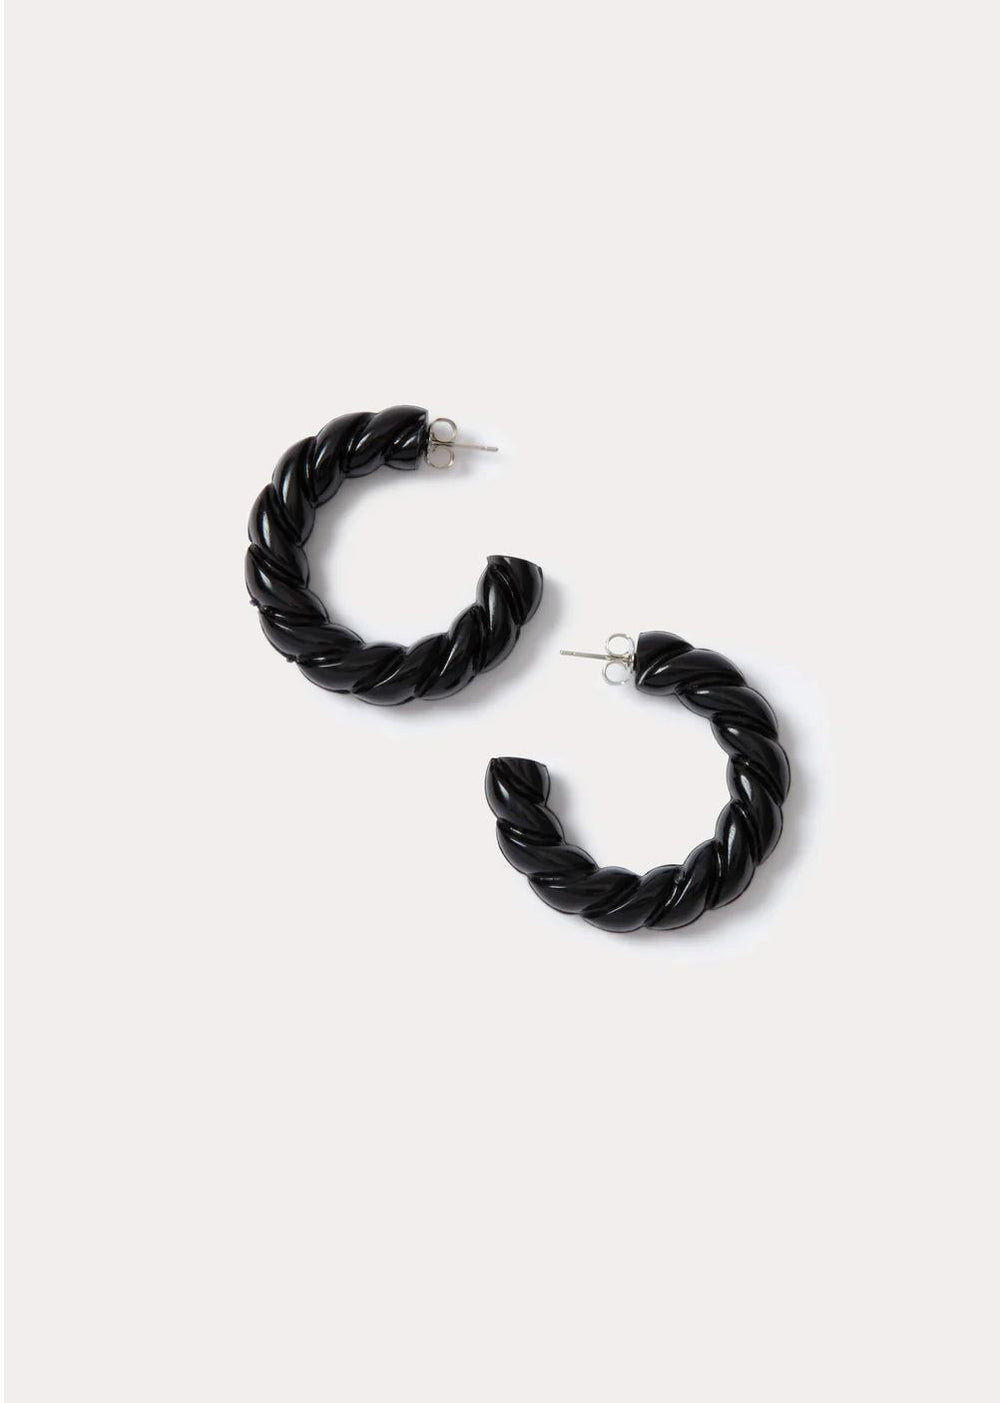 14k Yellow Gold Black Onyx Heart Shaped Hoop Earrings 3.1 Grams Gift | eBay